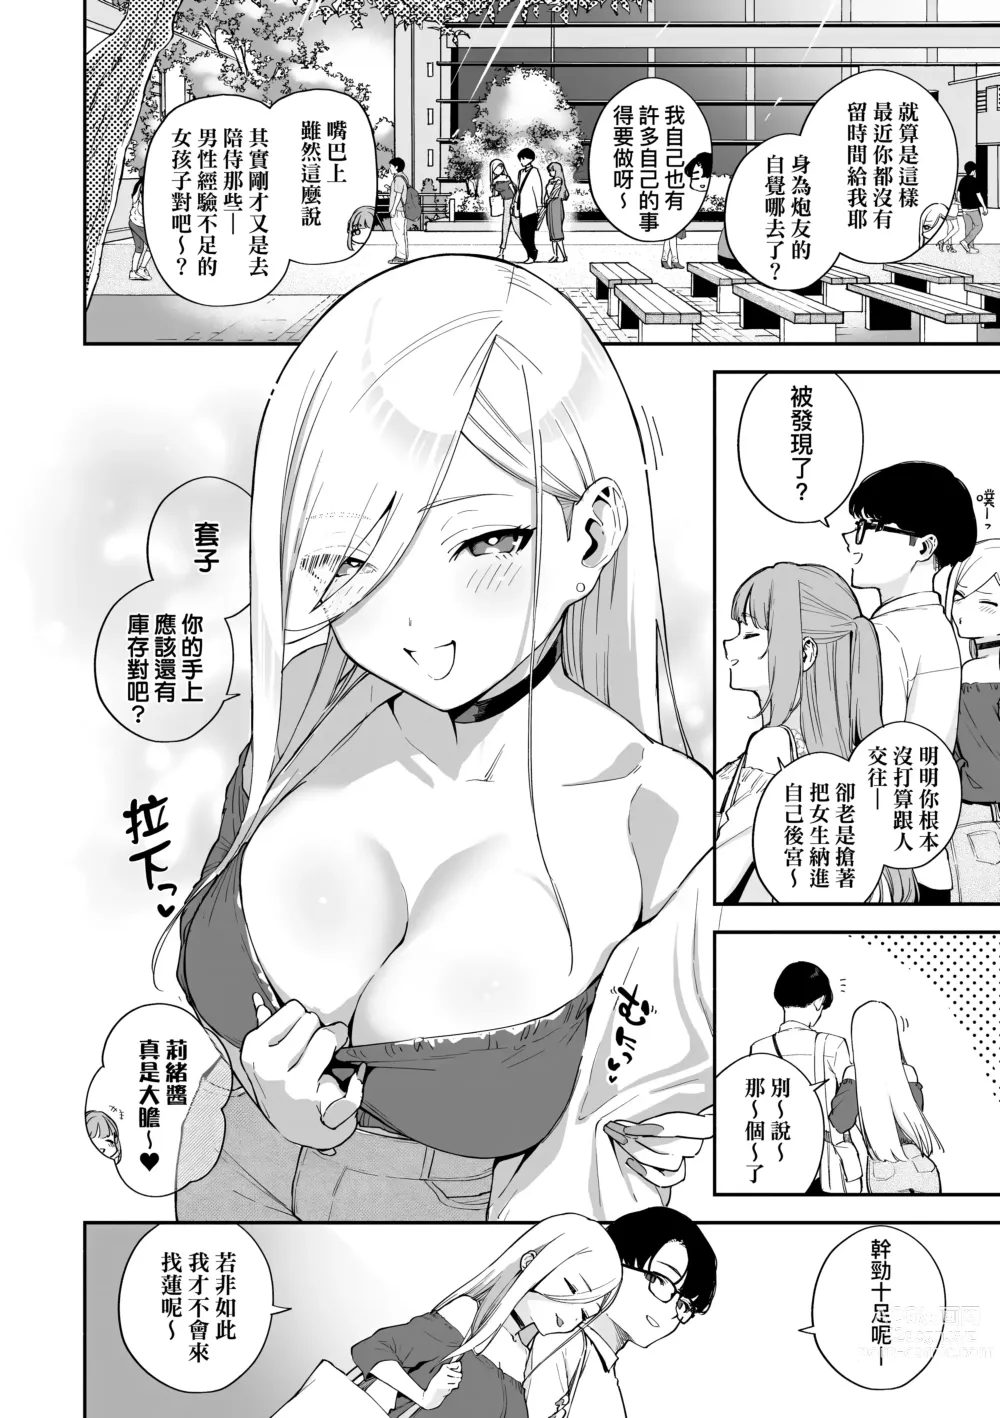 Page 8 of manga 苦澀・甘甜・錯綜複雜的滋味 (decensored)